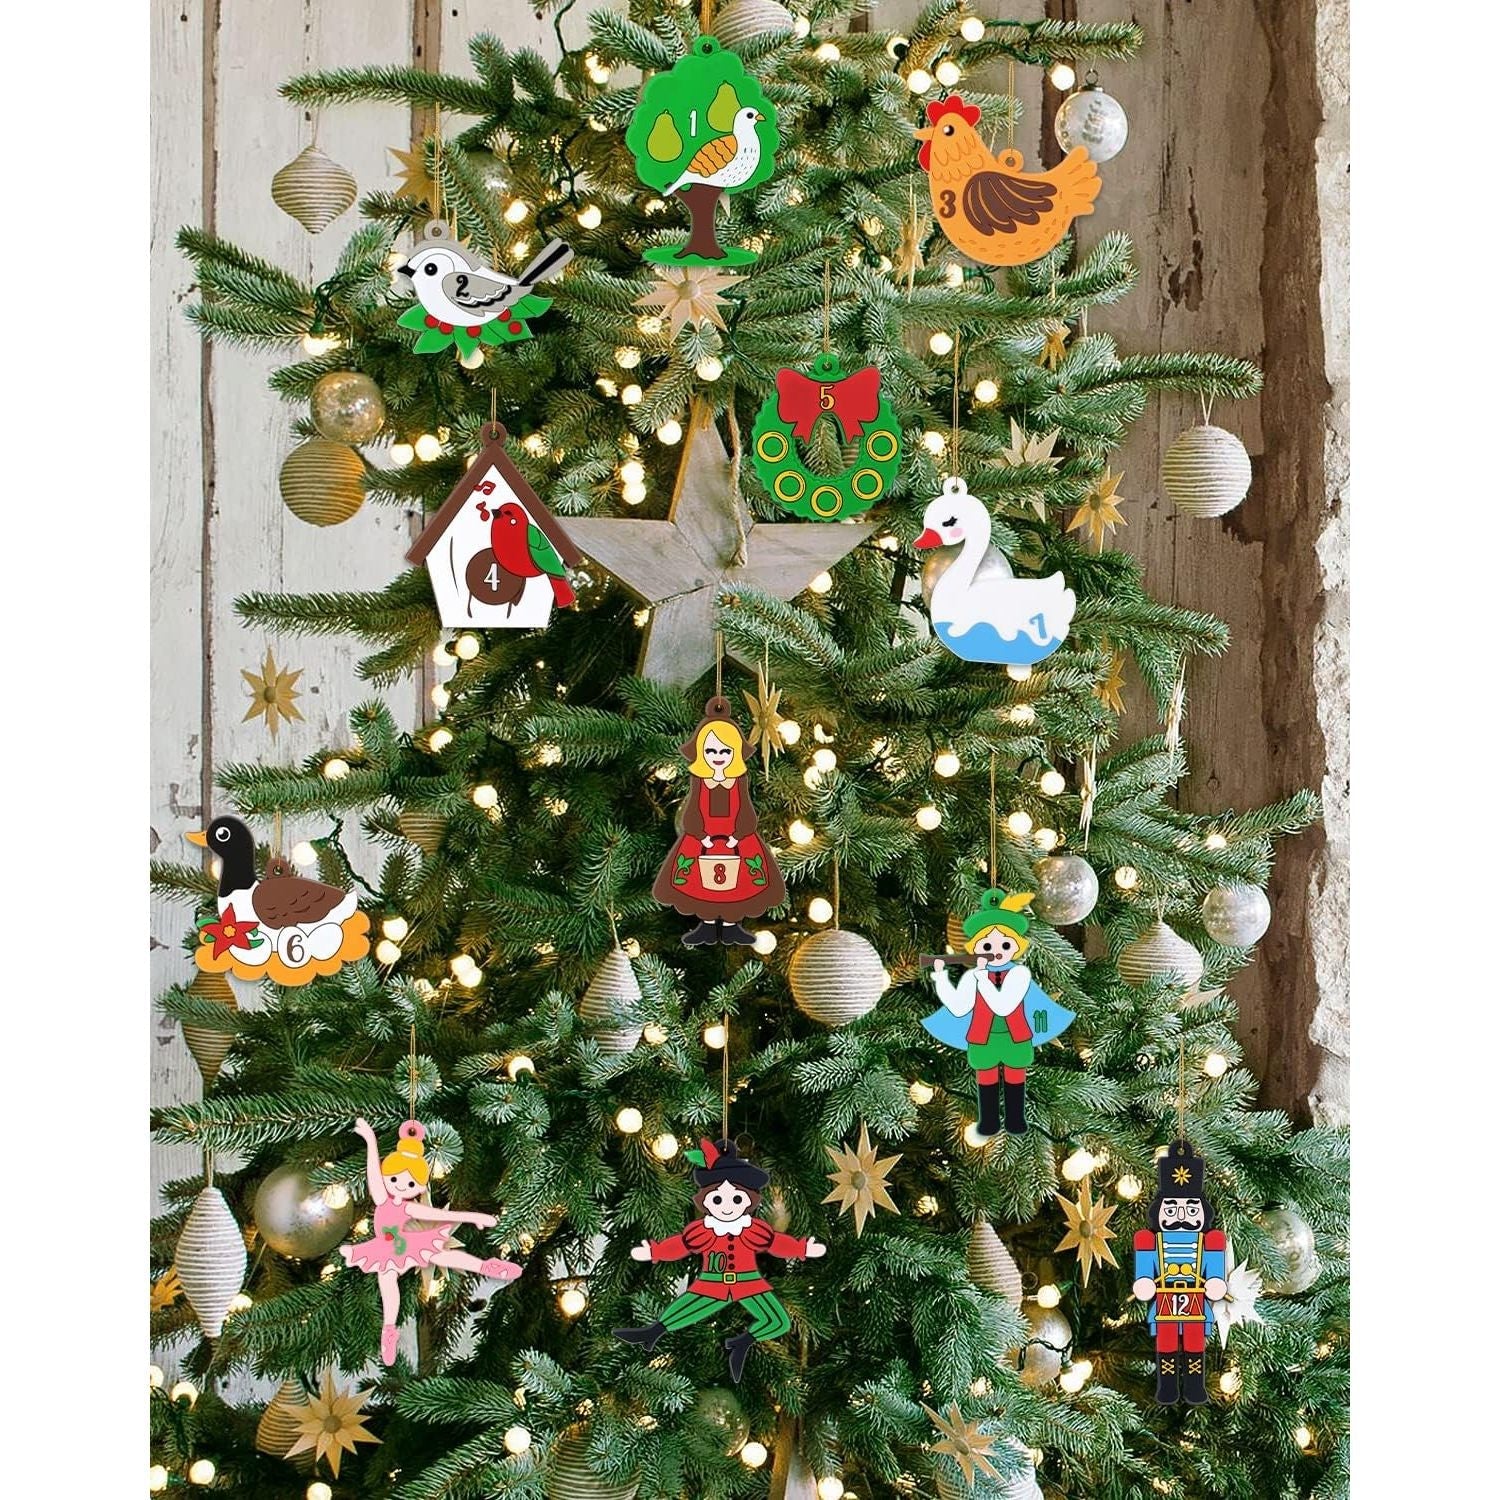 12 Days of Christmas Ornaments Set of 12 momhomedecor